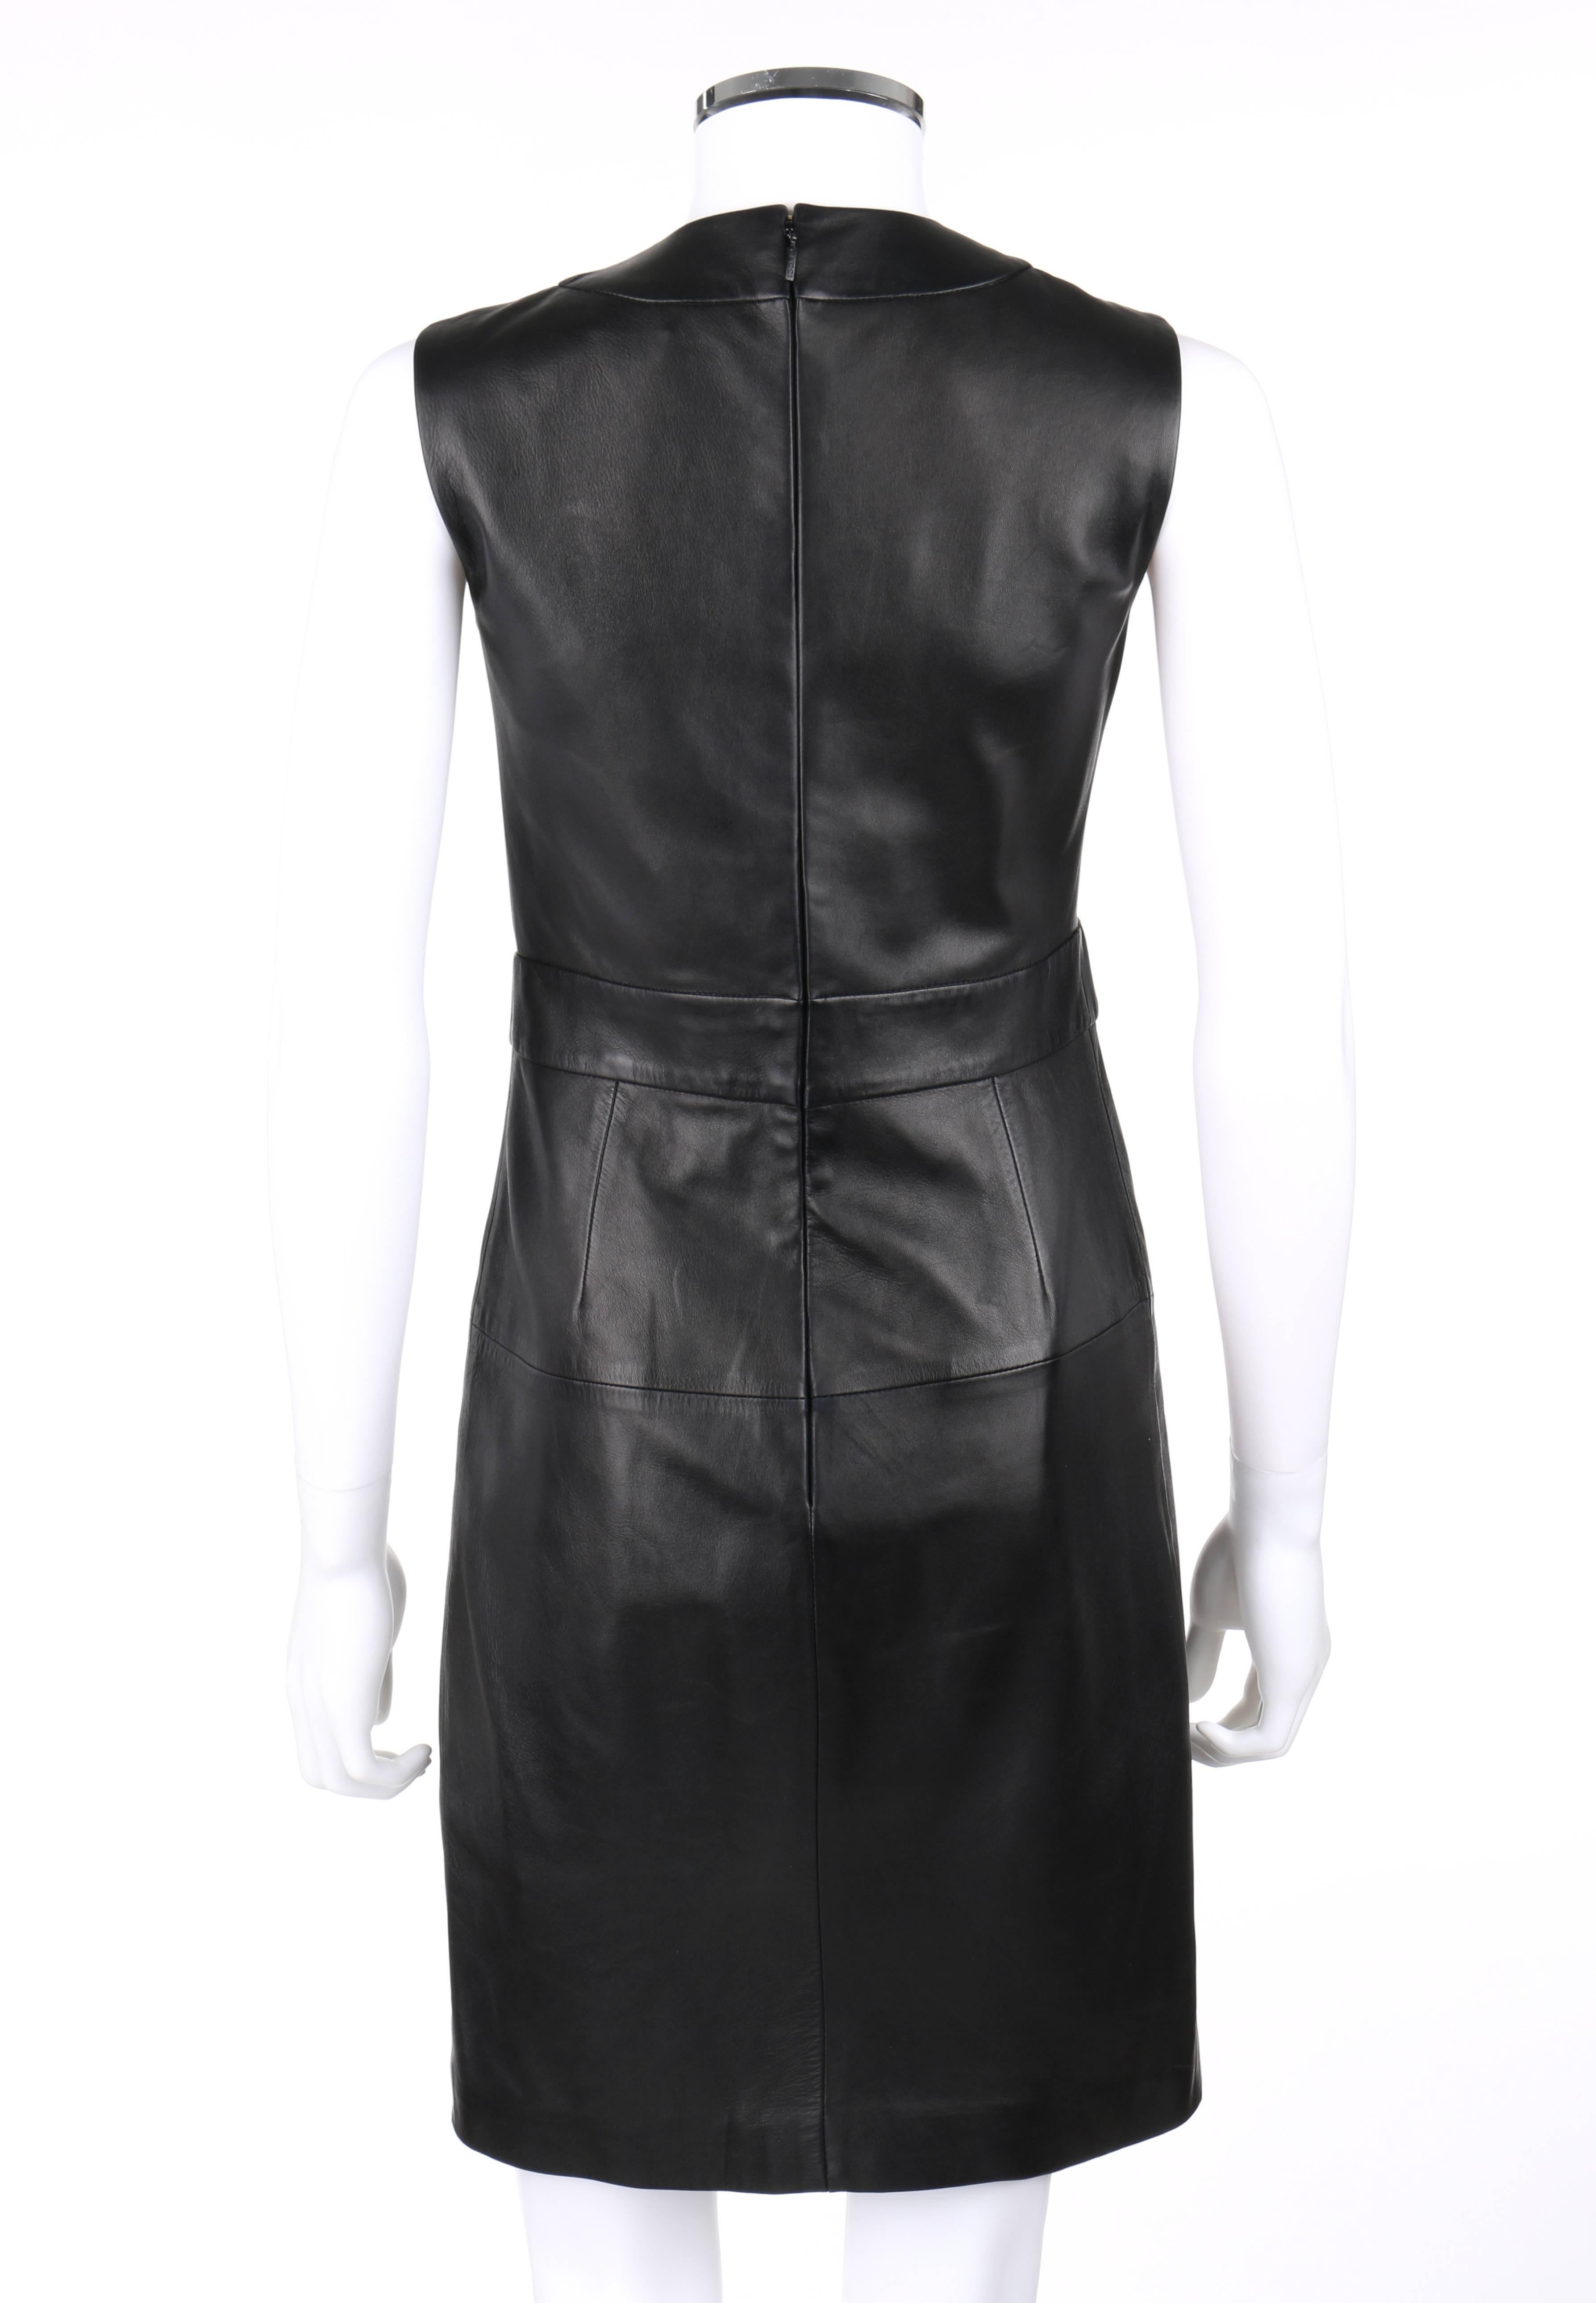 Women's GUCCI S/S 2015 Black Napa Leather Lattice Lace Up Grommeted Sheath Dress